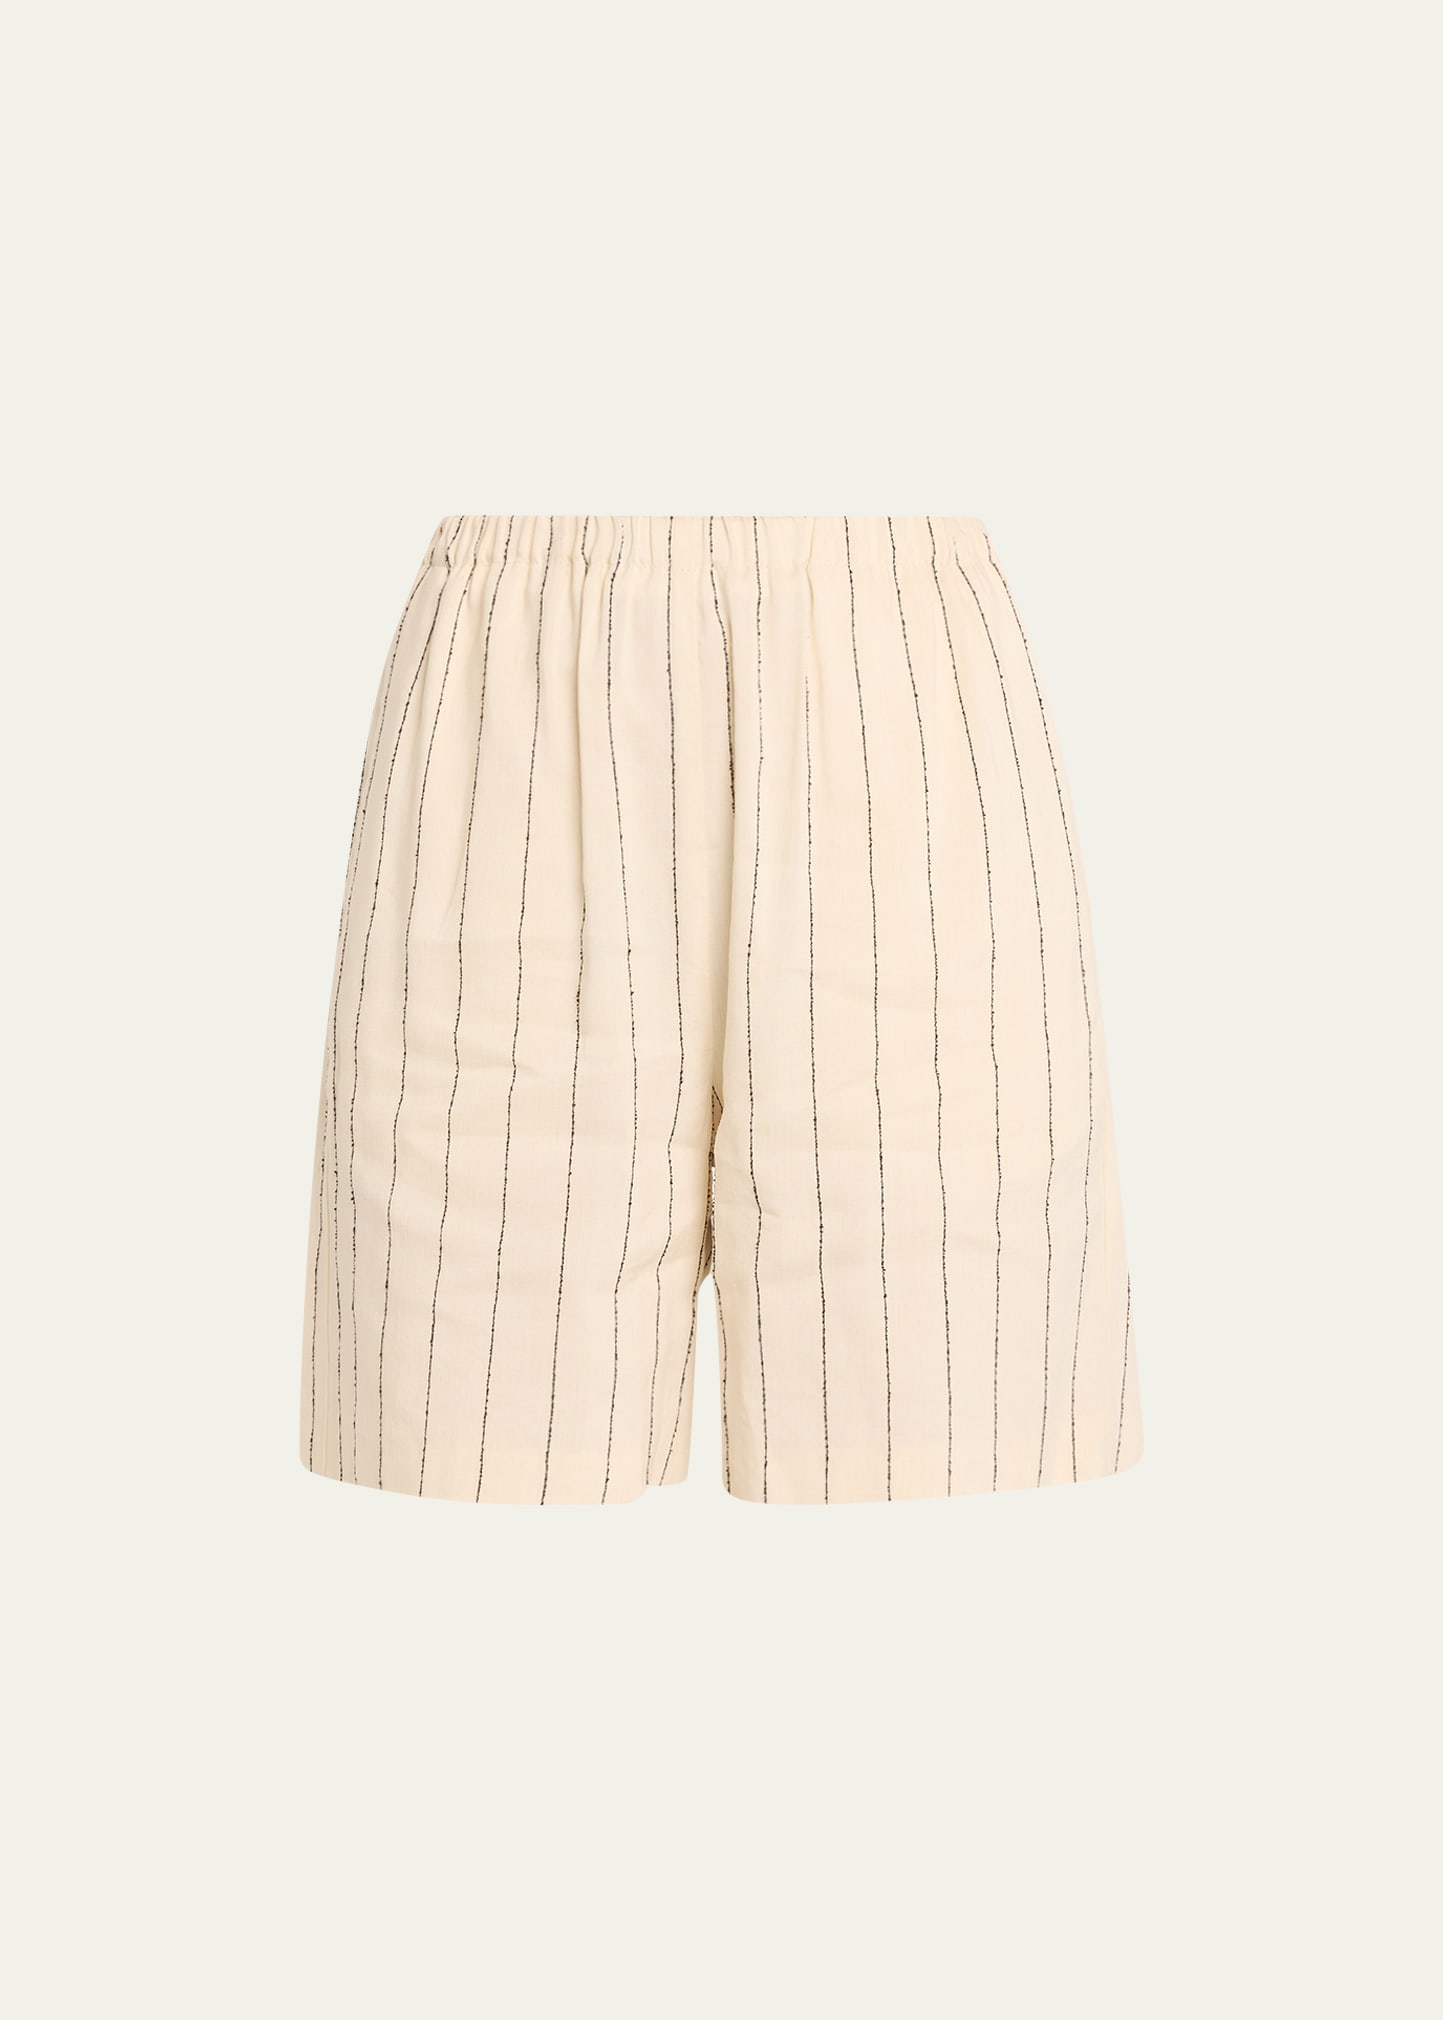 Stripe Elastic Waist Linen Shorts